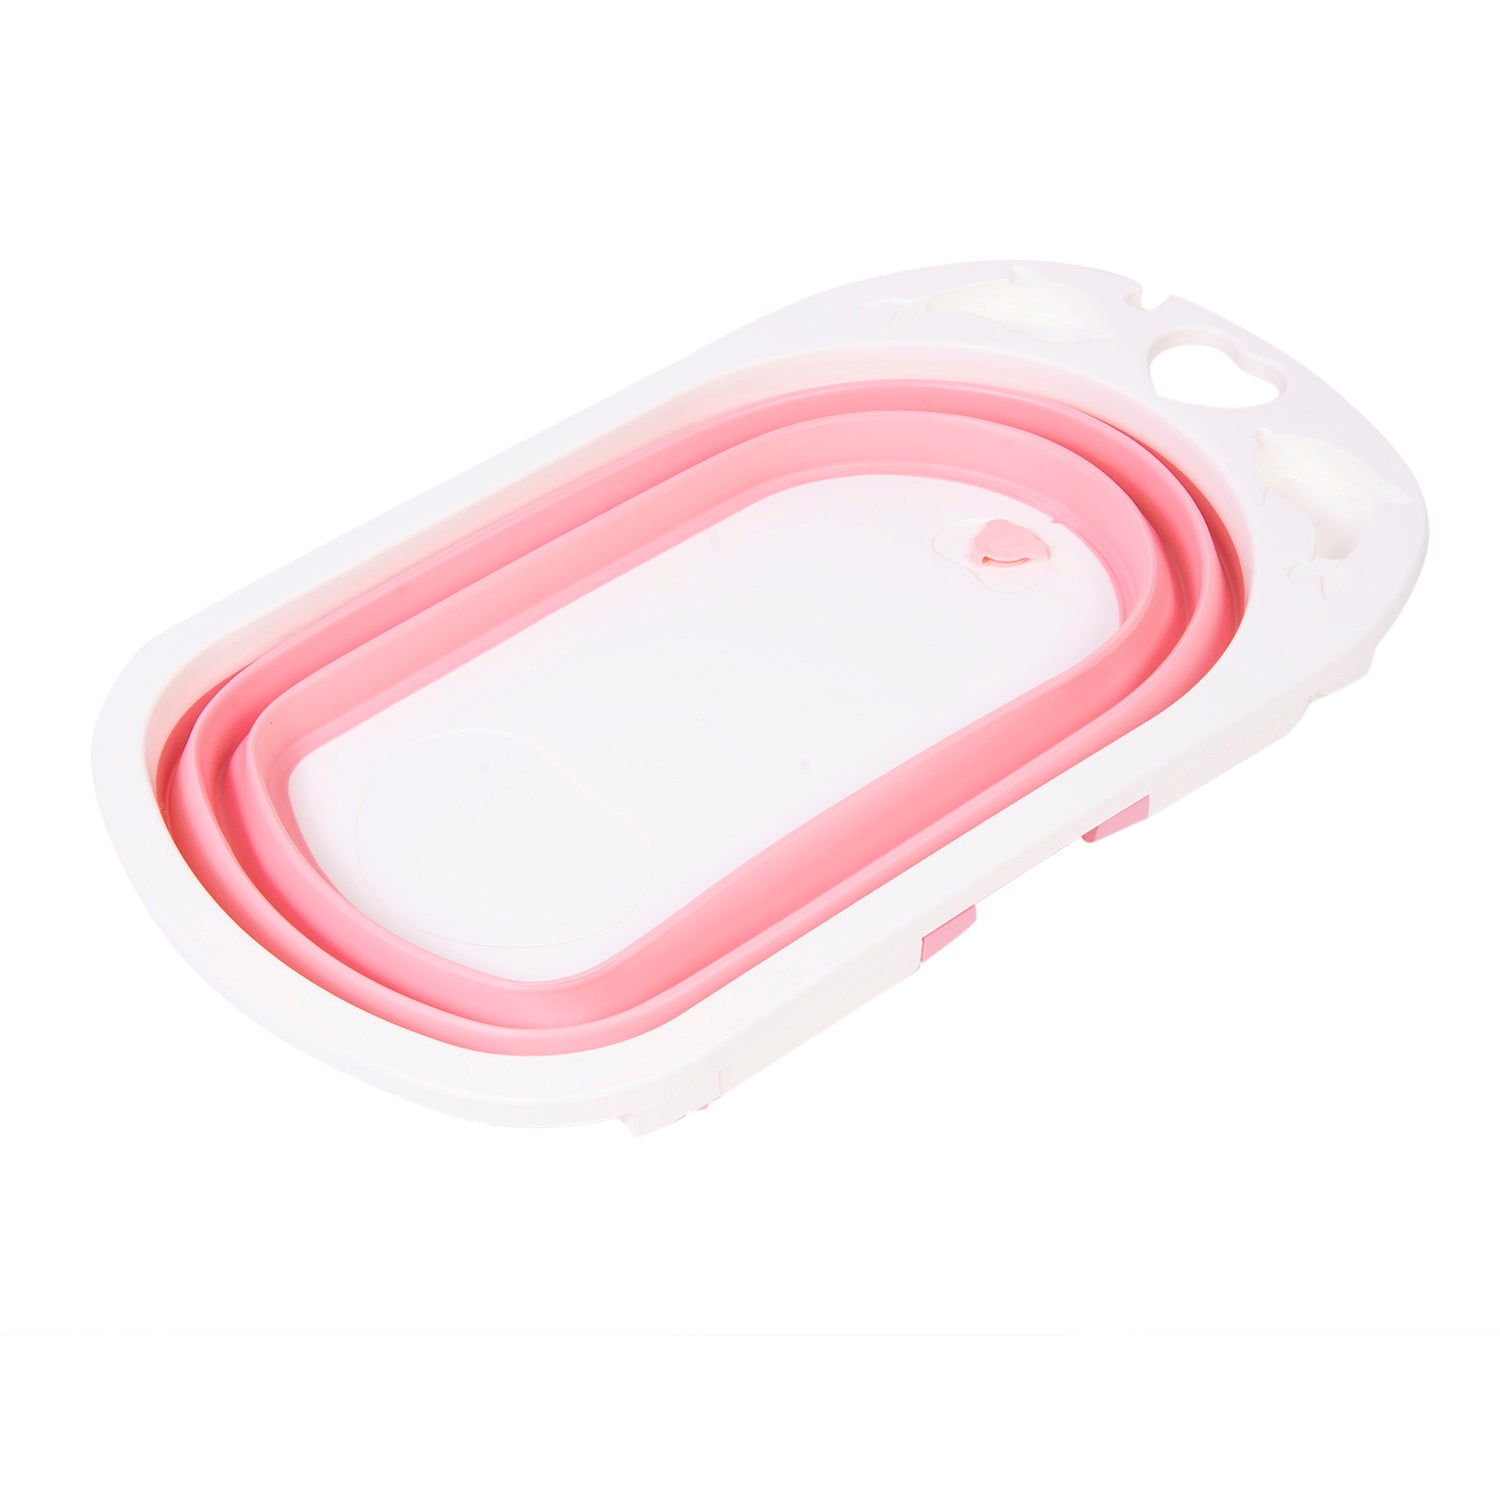 Portable Folding Bath Tub With Drain Plug Pink - Baby Moo